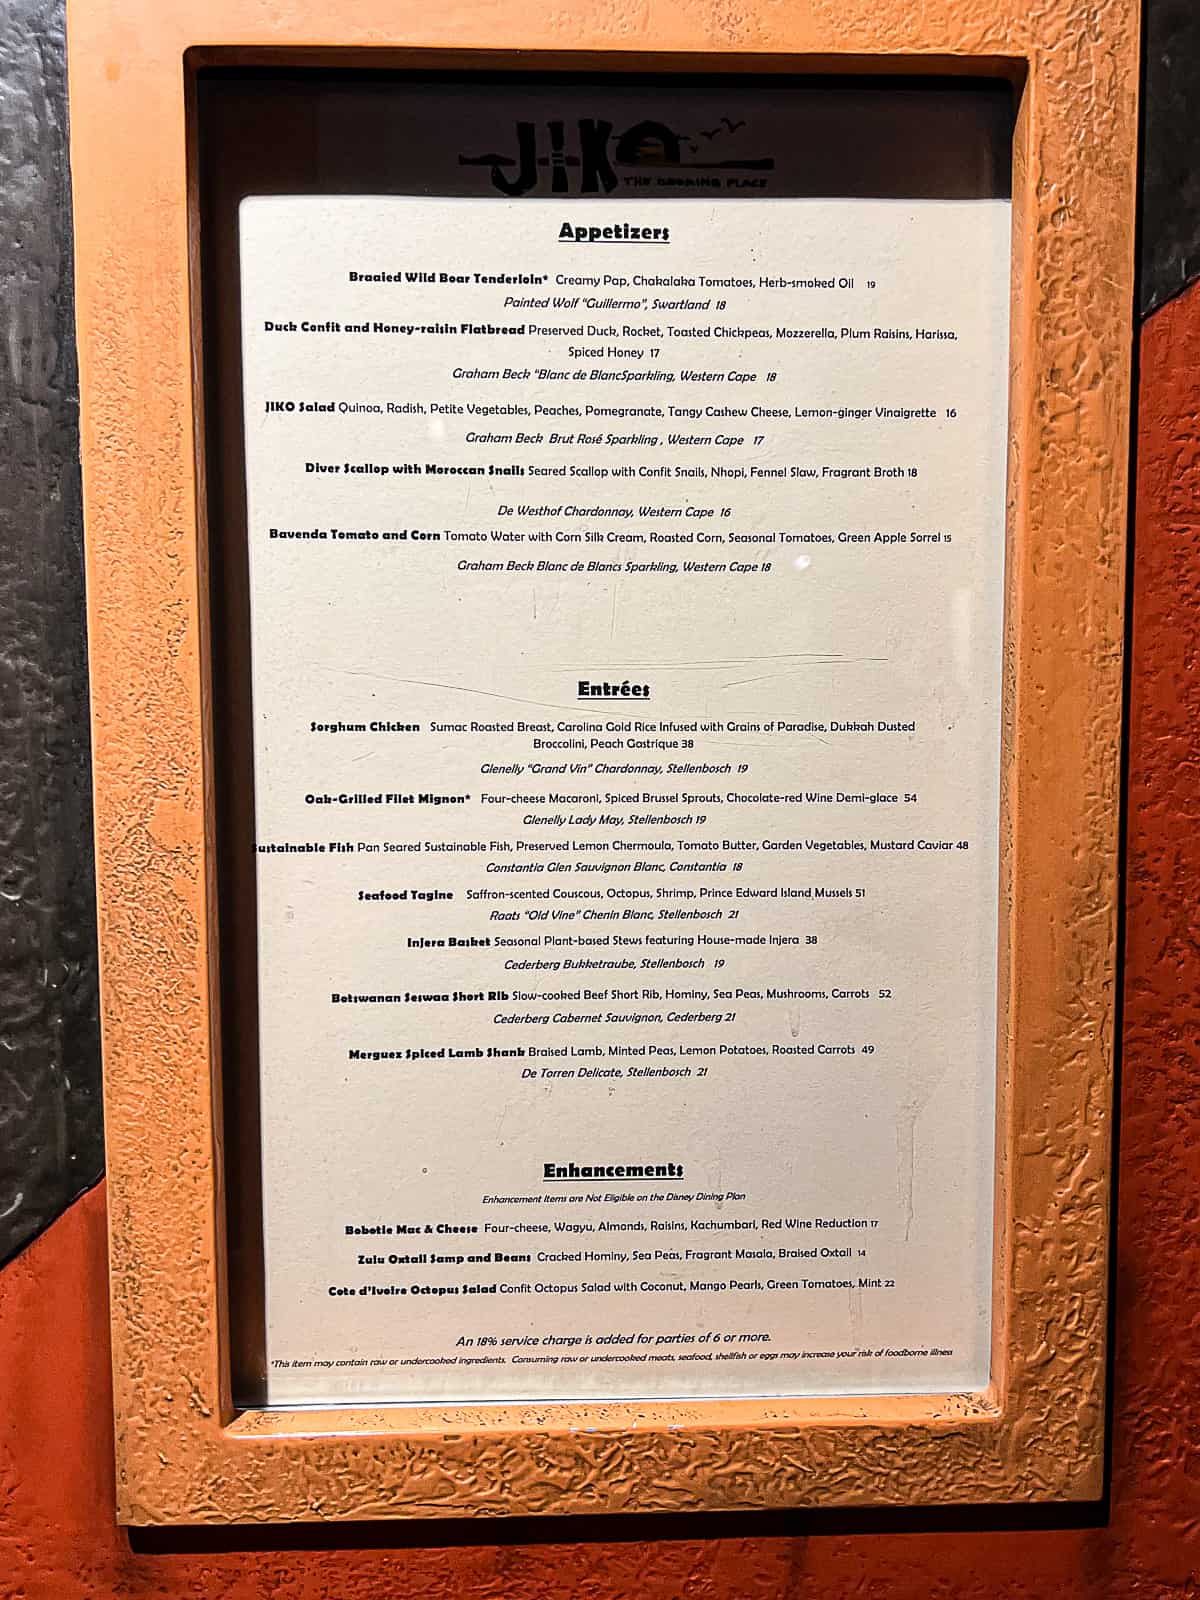 Closeup of menu for Jiko Animal Kingdom Restaurant in Jambo House